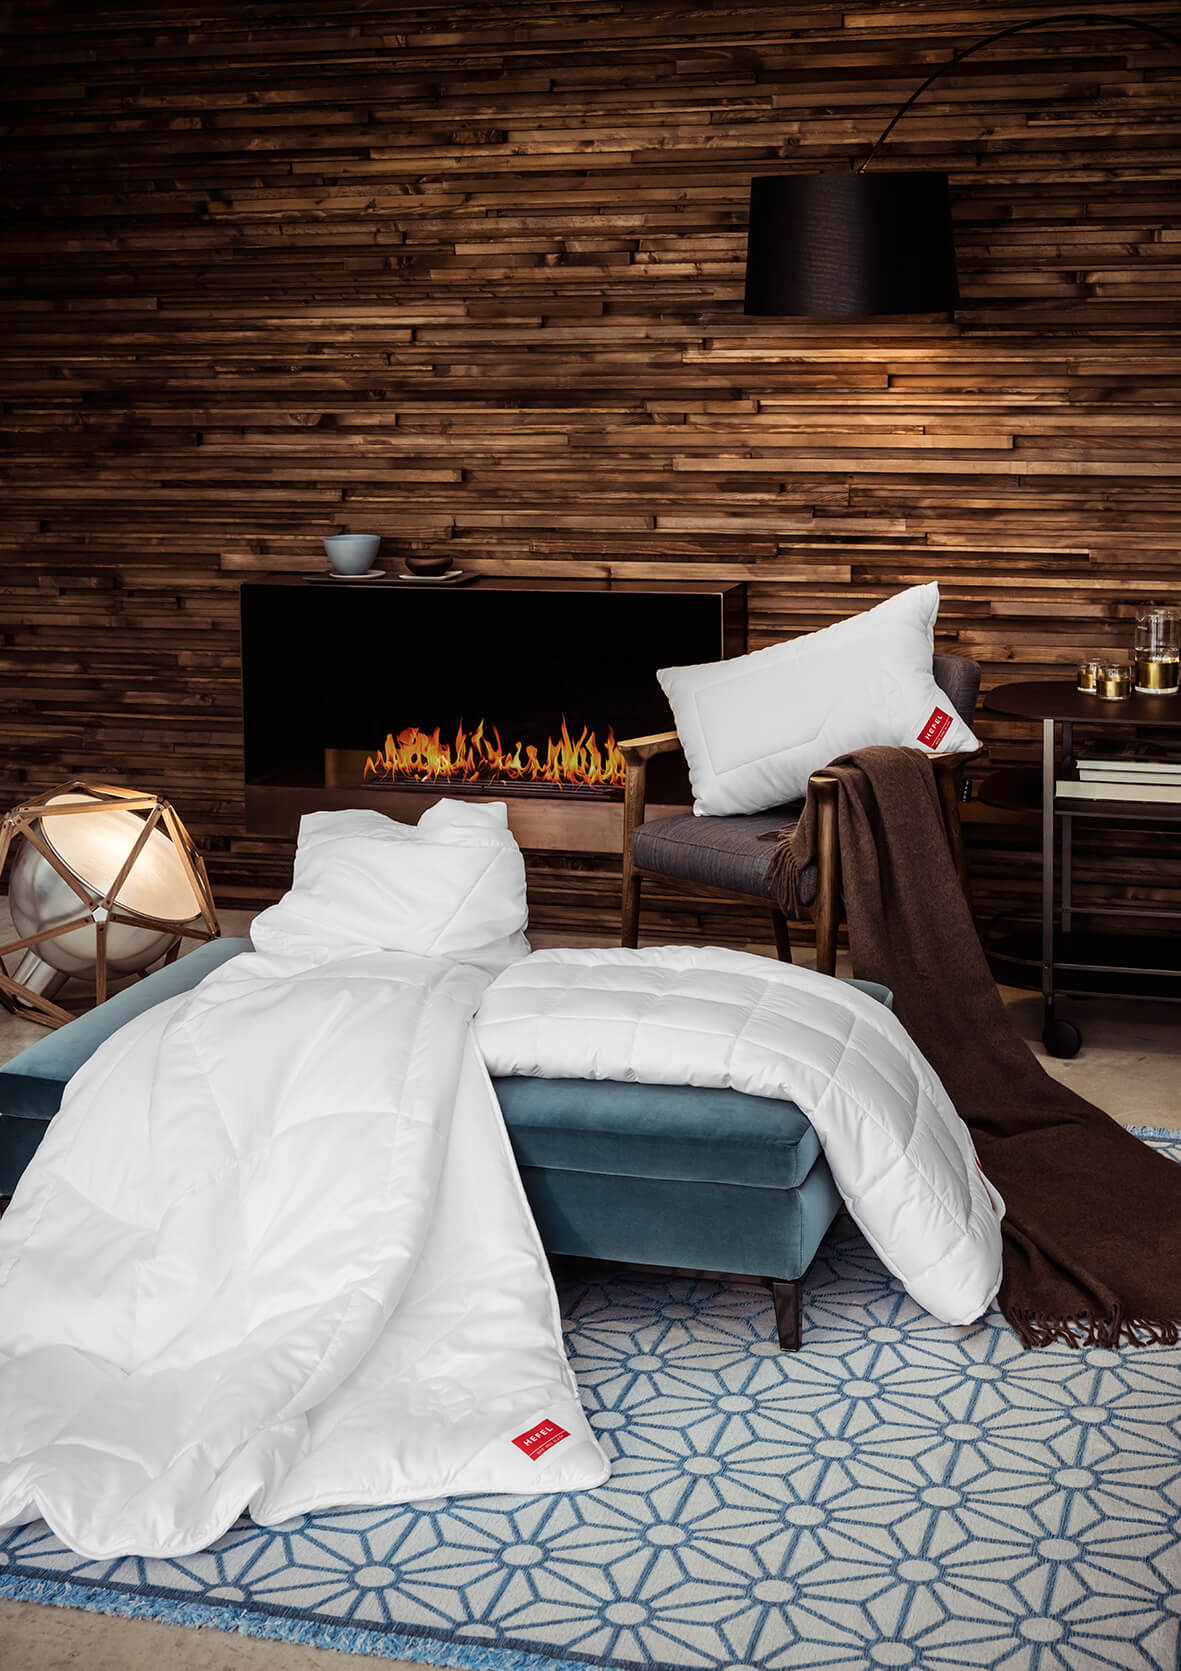 Наволочка на подушку Hefel Klimacontrol Comfort ☞ Размер наволочек: 50 x 70 см